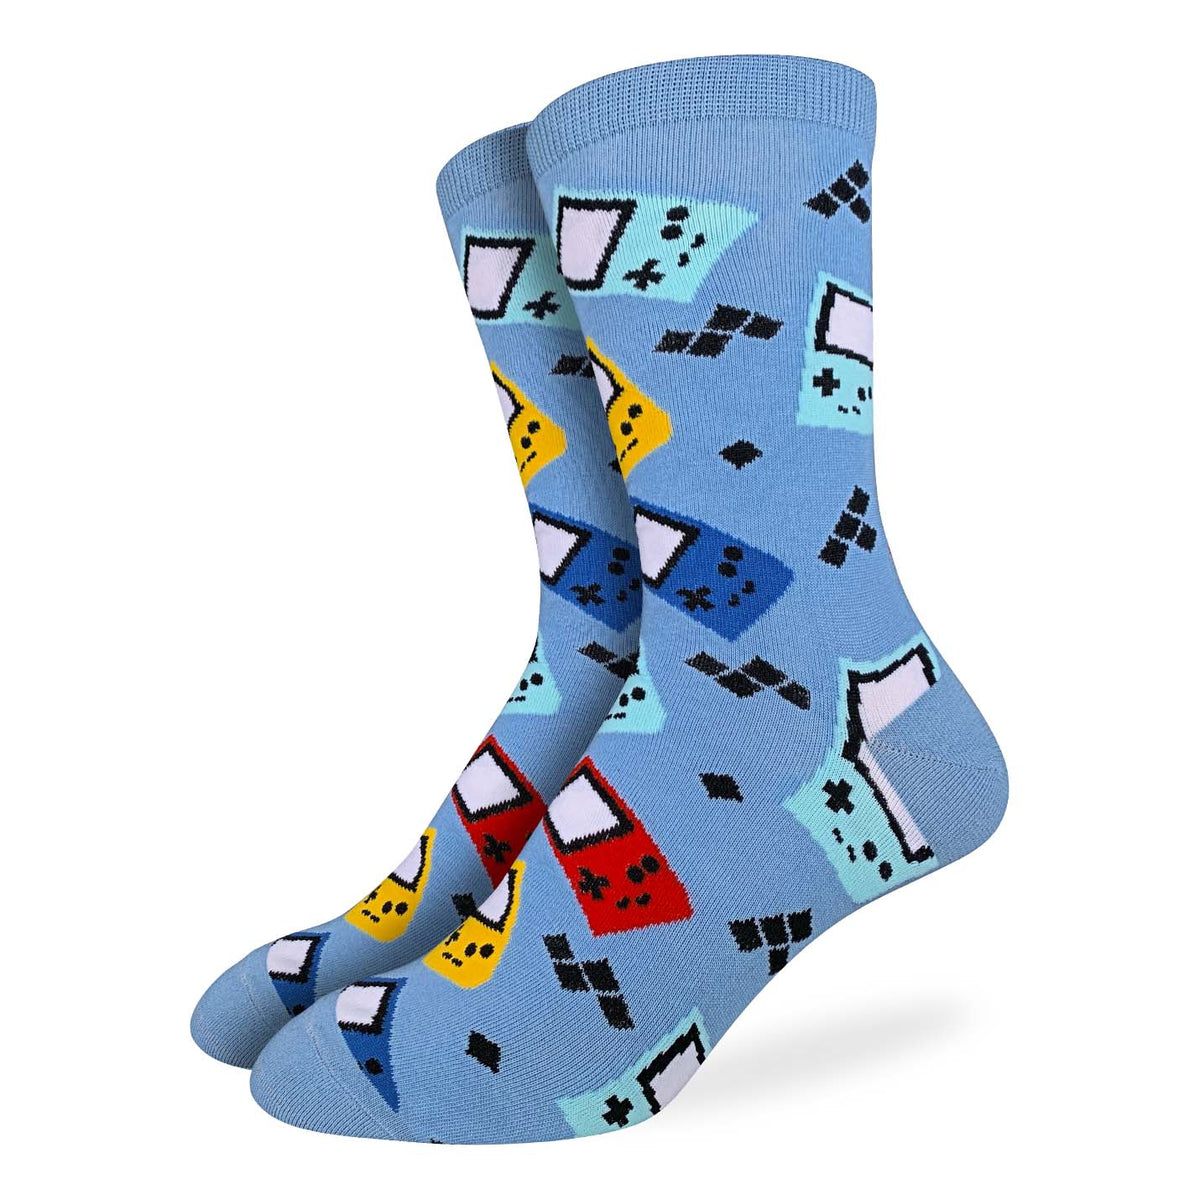 Men's Handheld Game Console Socks